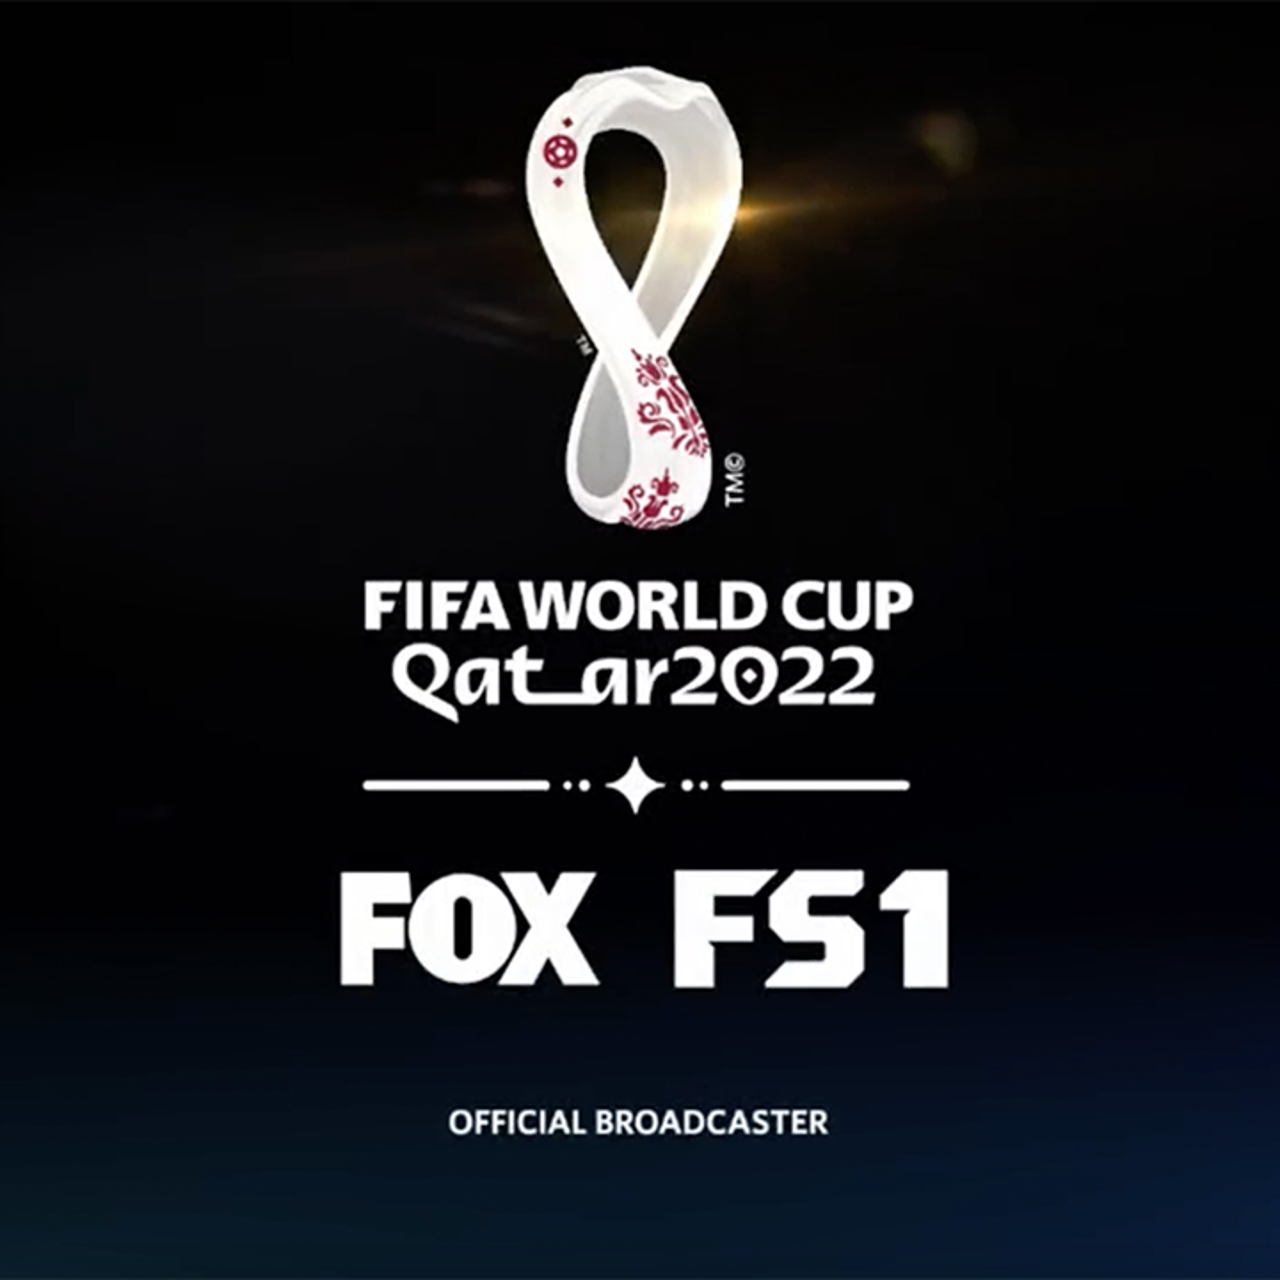 fox fifa world cup 2022